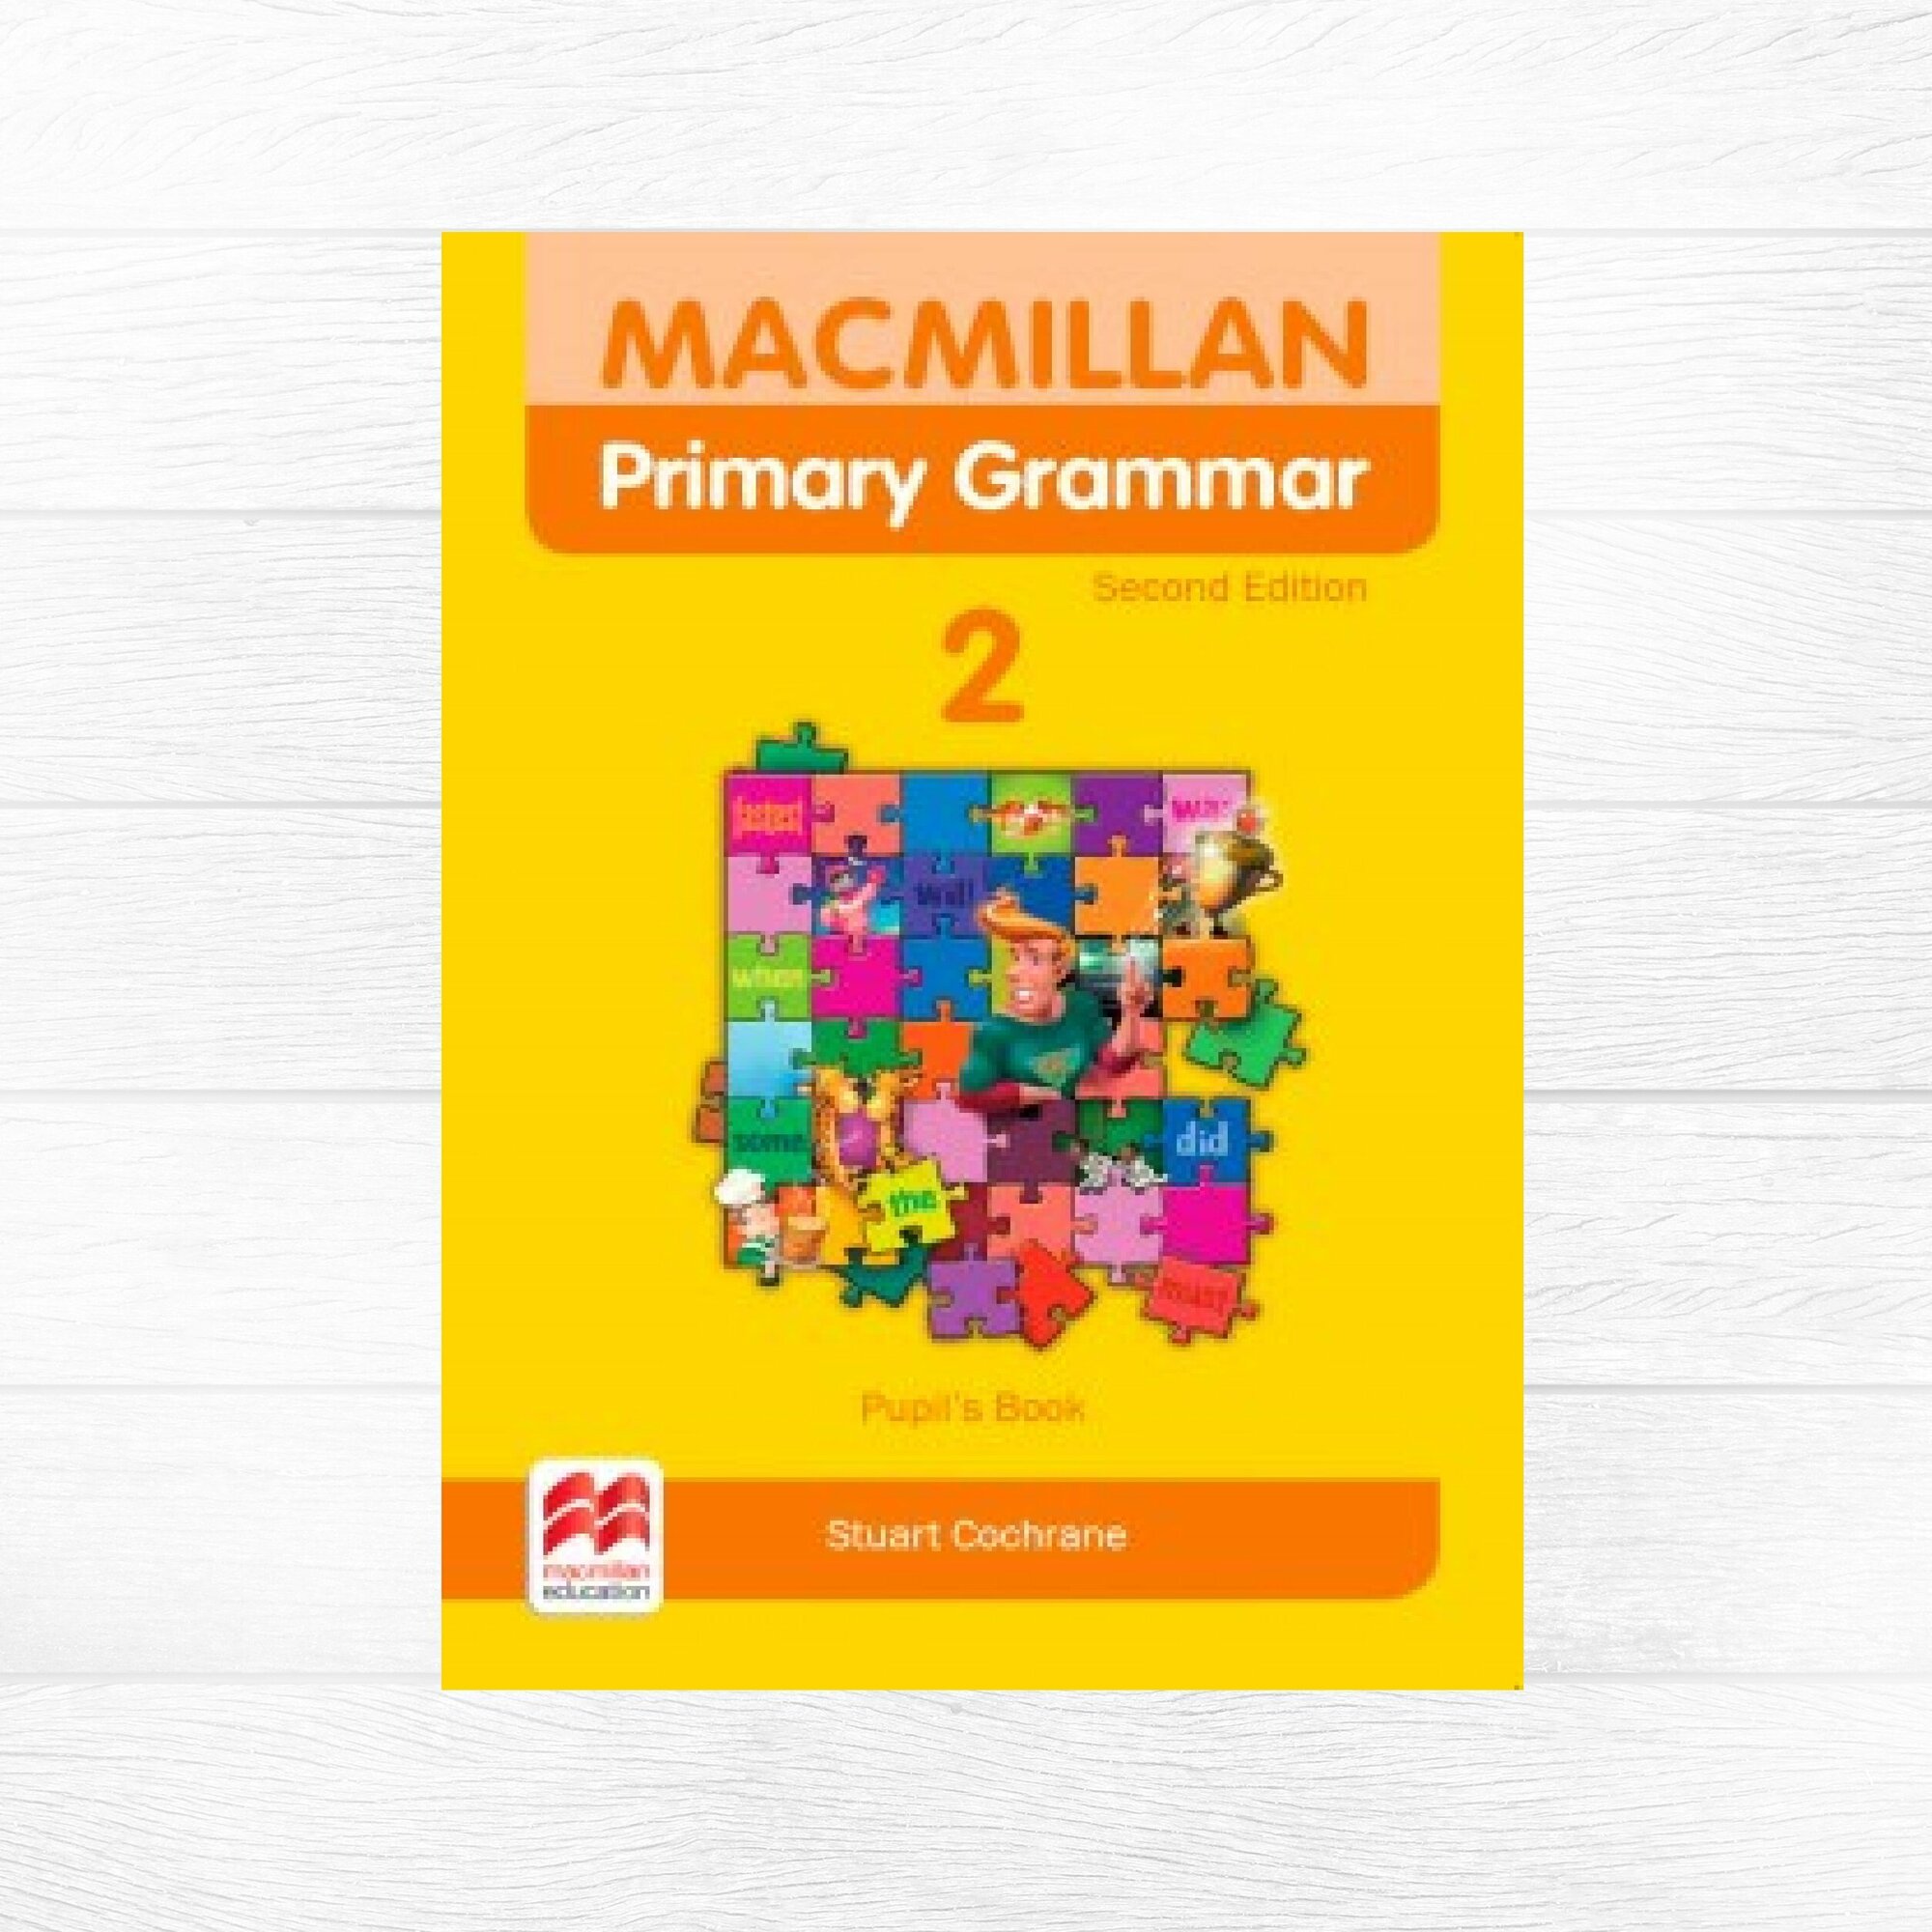 Macmillan Primary Grammar Second Edition 2 Student's Book pack + Webcode, грамматика английского языка для детей